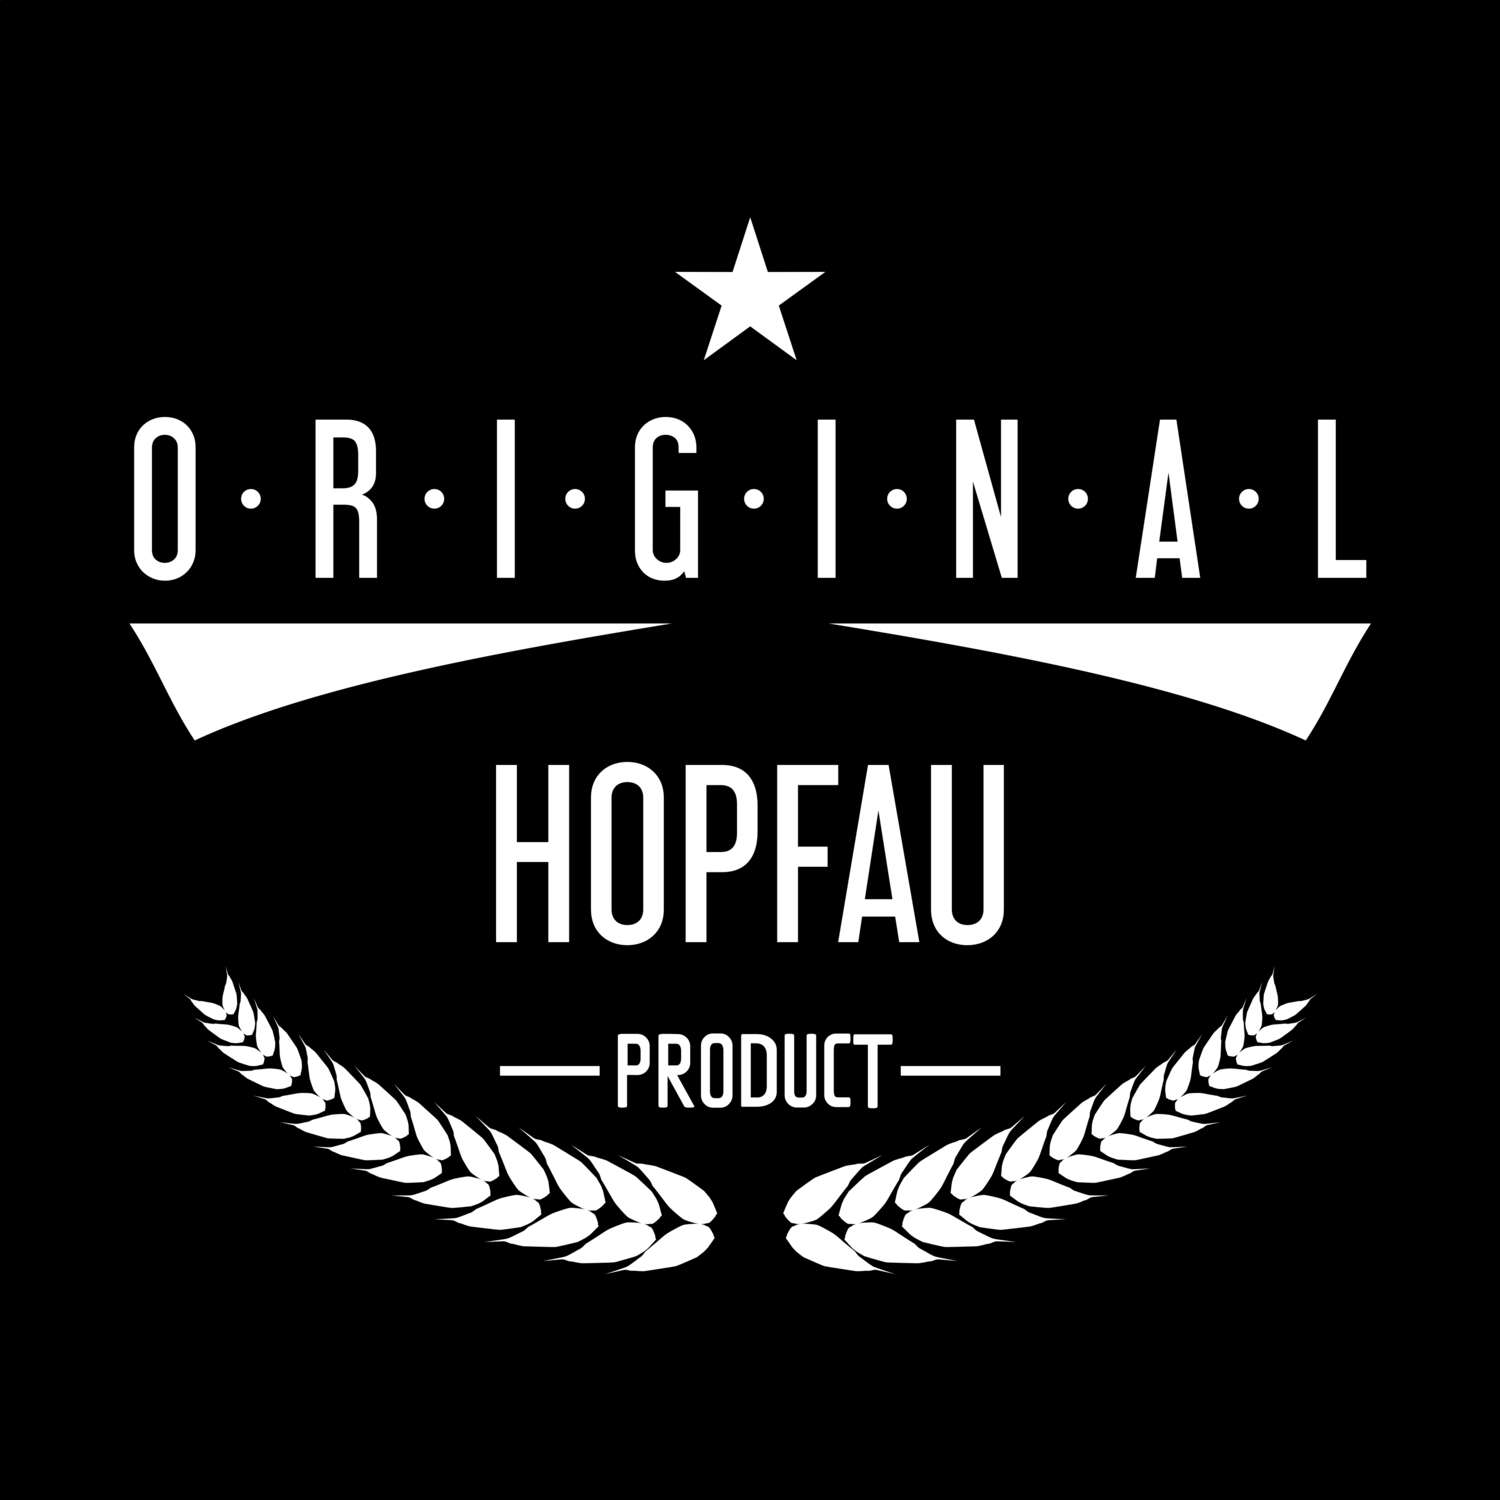 Hopfau T-Shirt »Original Product«